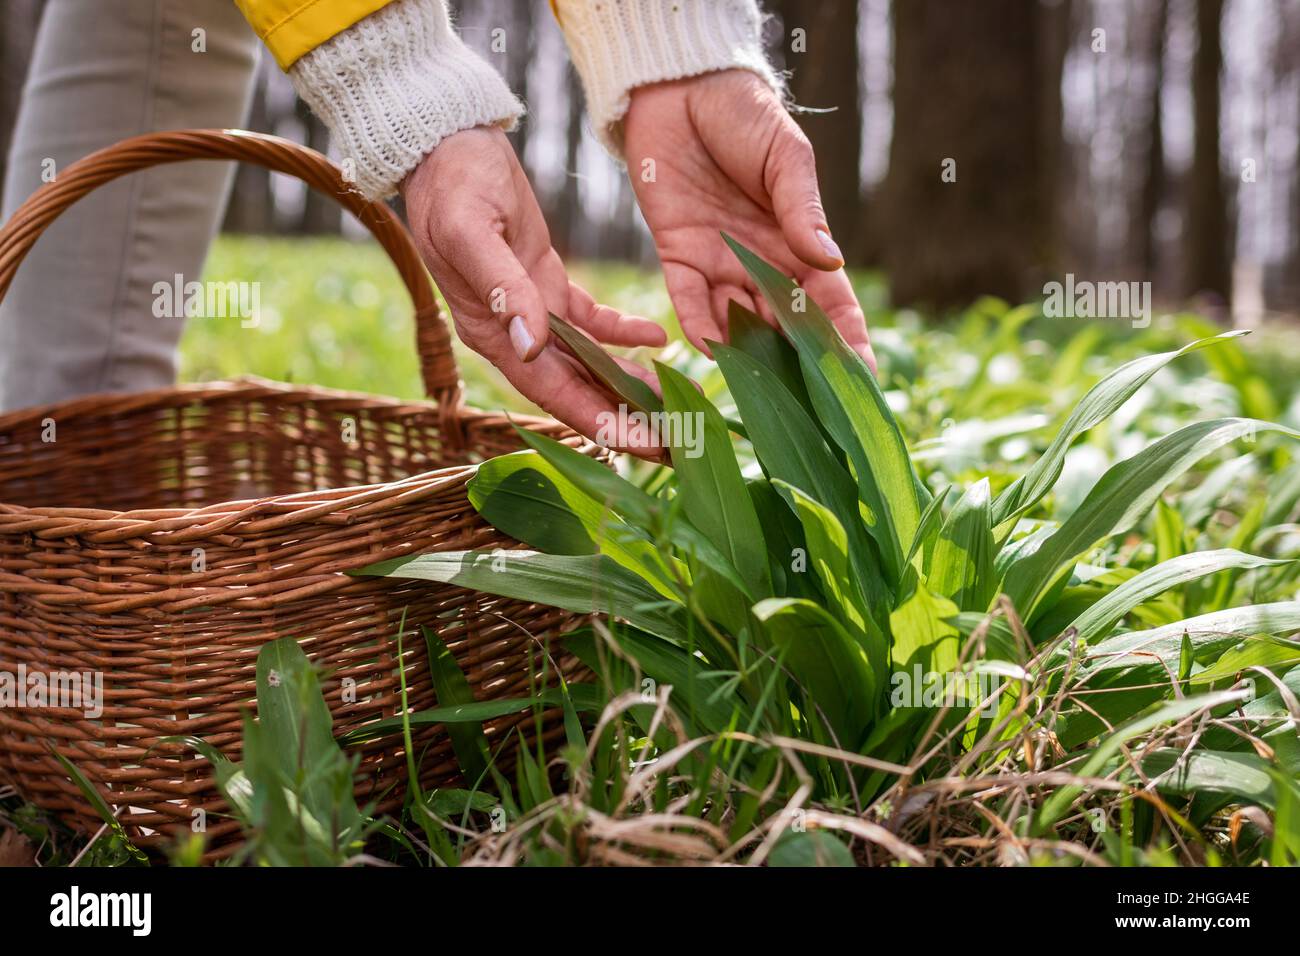 Woman picking wild garlic (allium ursinum) in forest. Harvesting Ramson leaves herb into wicker basket Stock Photo